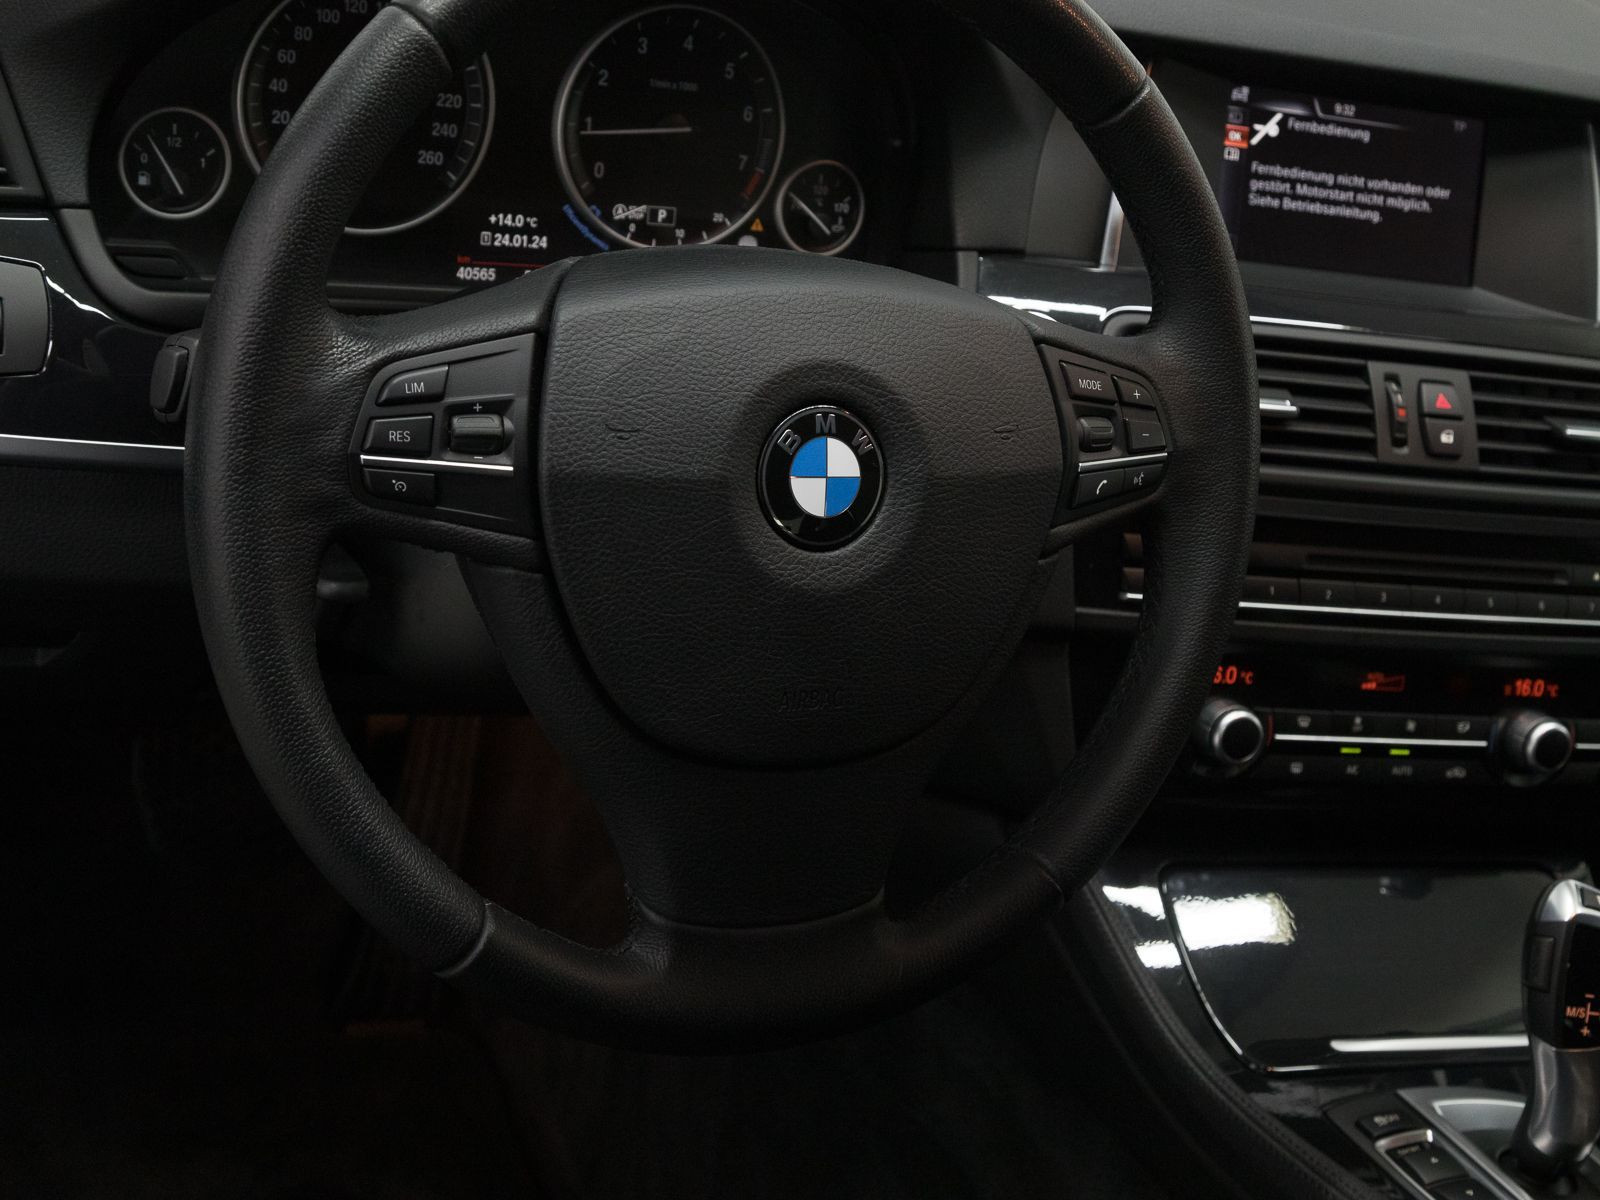 BMW 528 i Touring